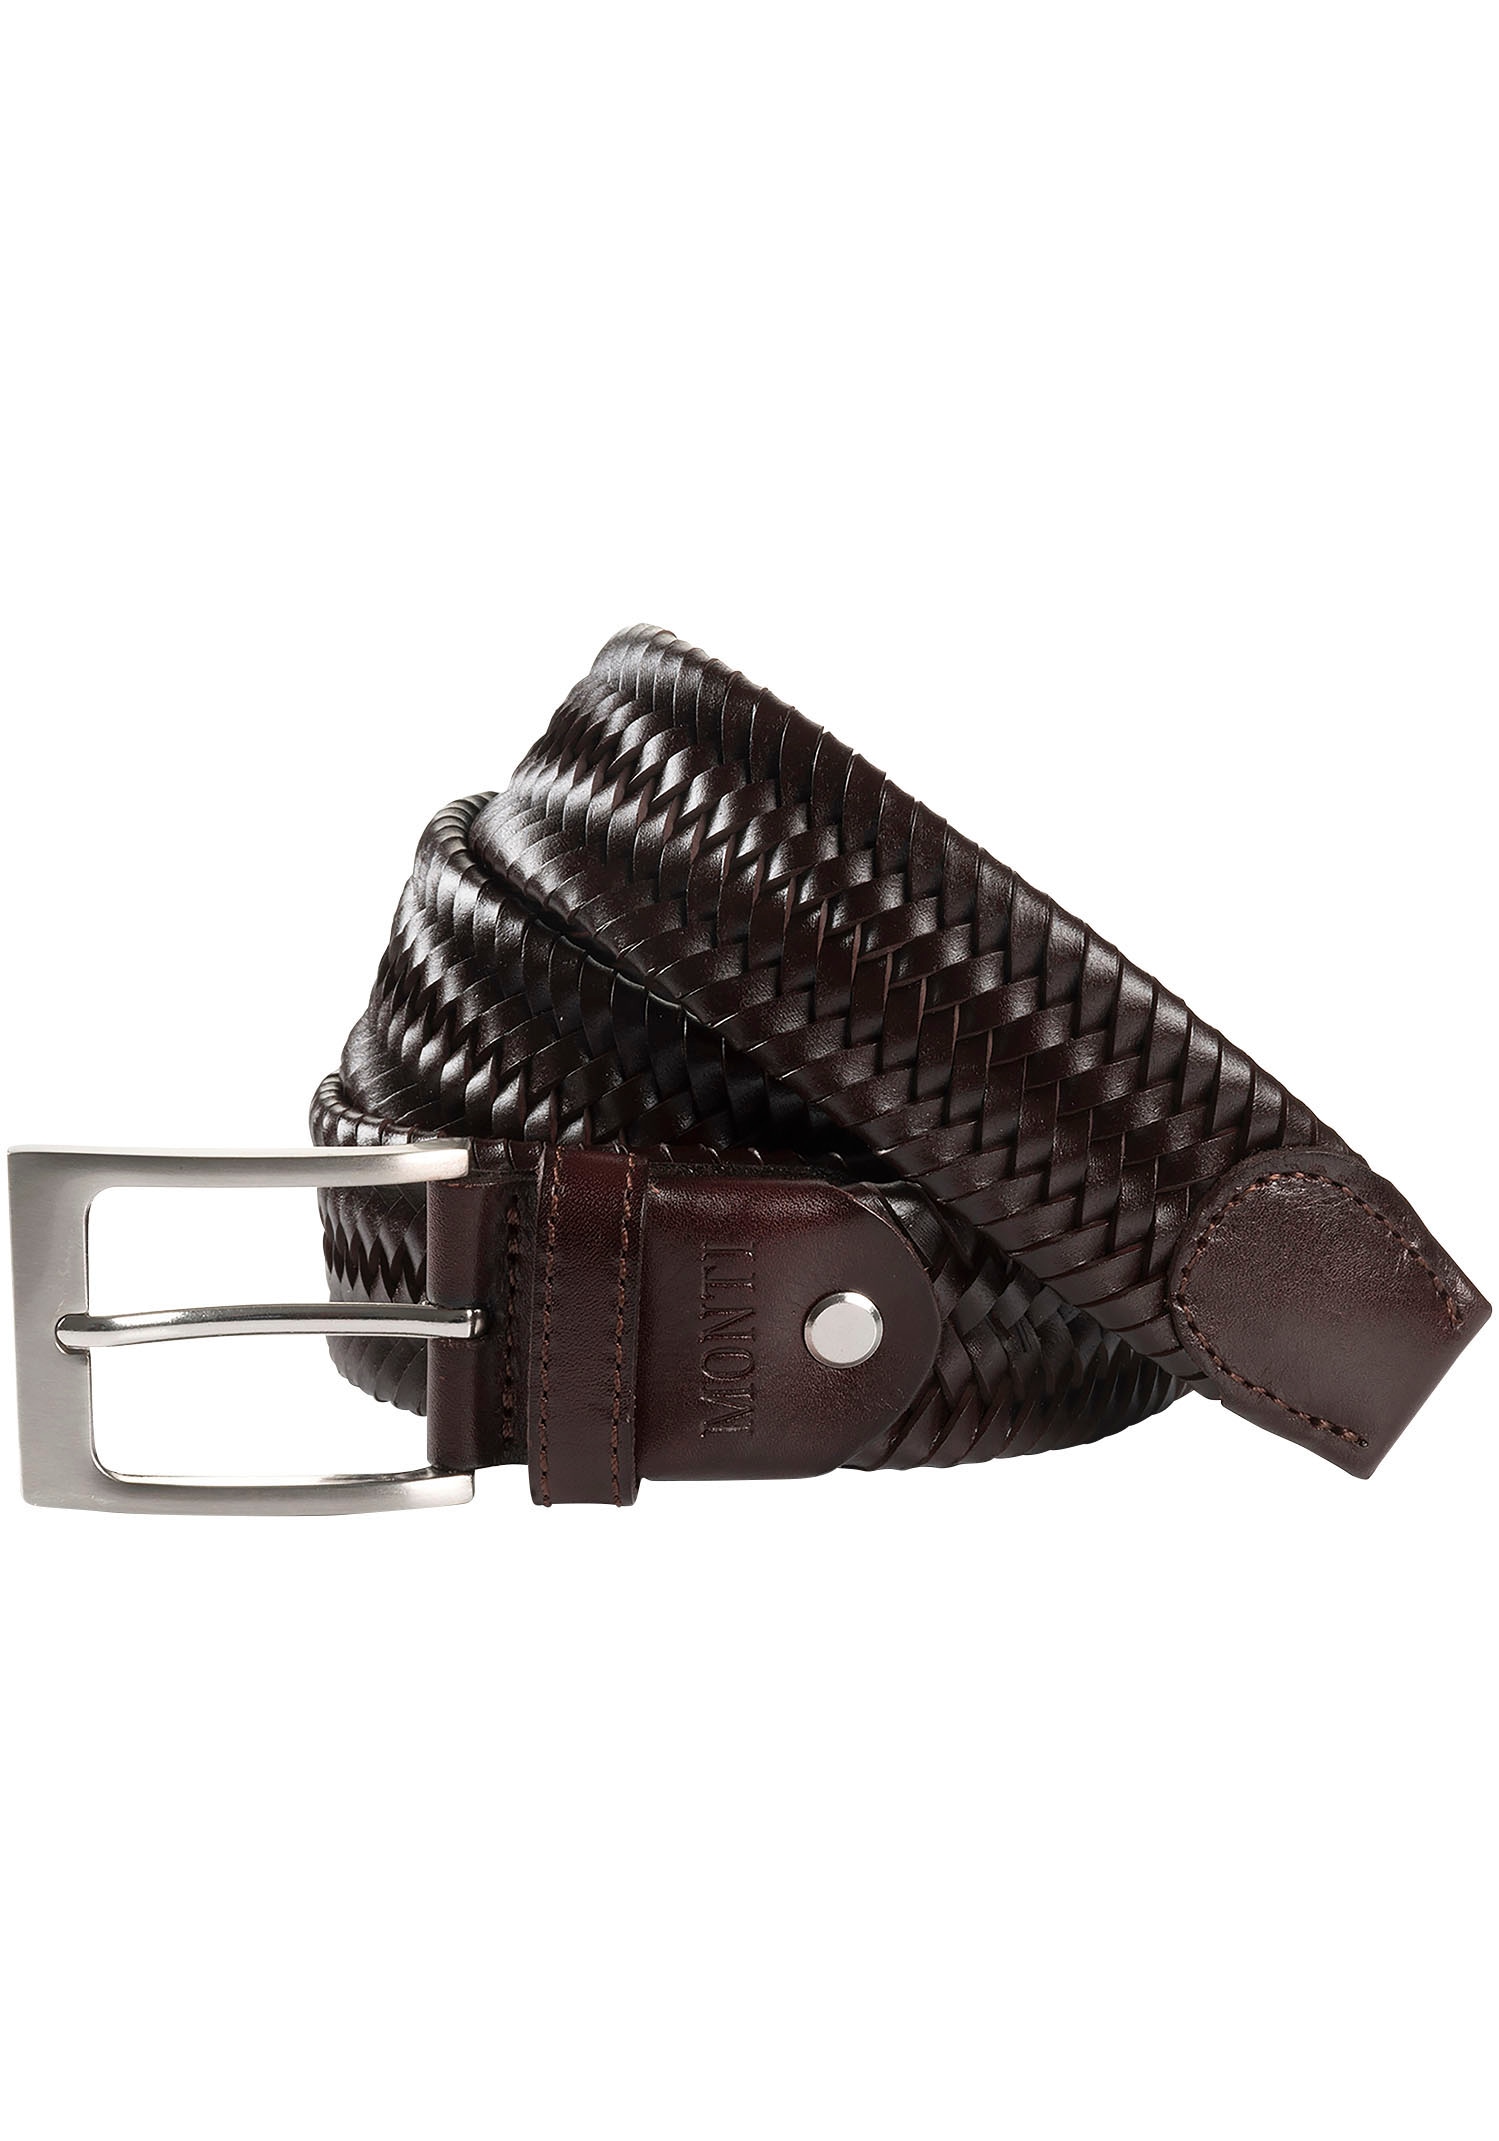 MONTI Flechtgürtel "RIO", 3,5 cm breit, Elastisches Leder-Flechtband, Casual-Business-Sportiv